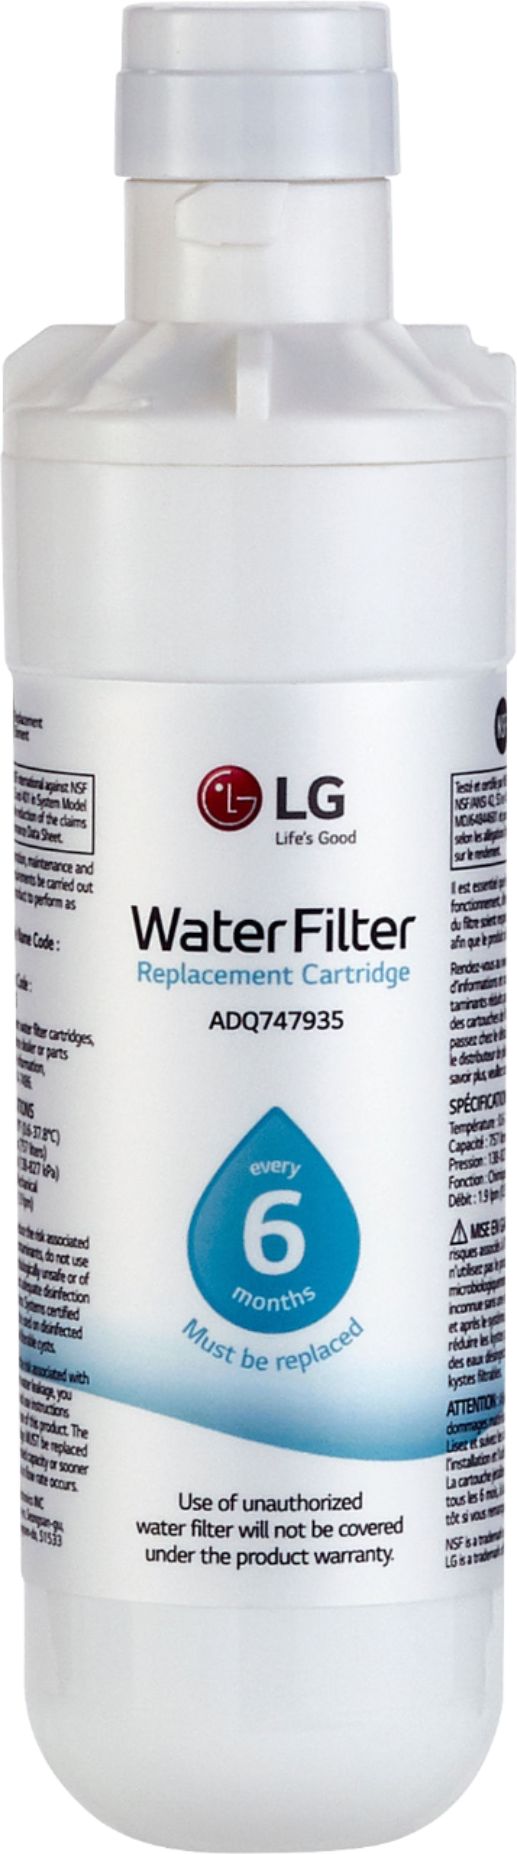 32++ Lg fridge filter price ideas